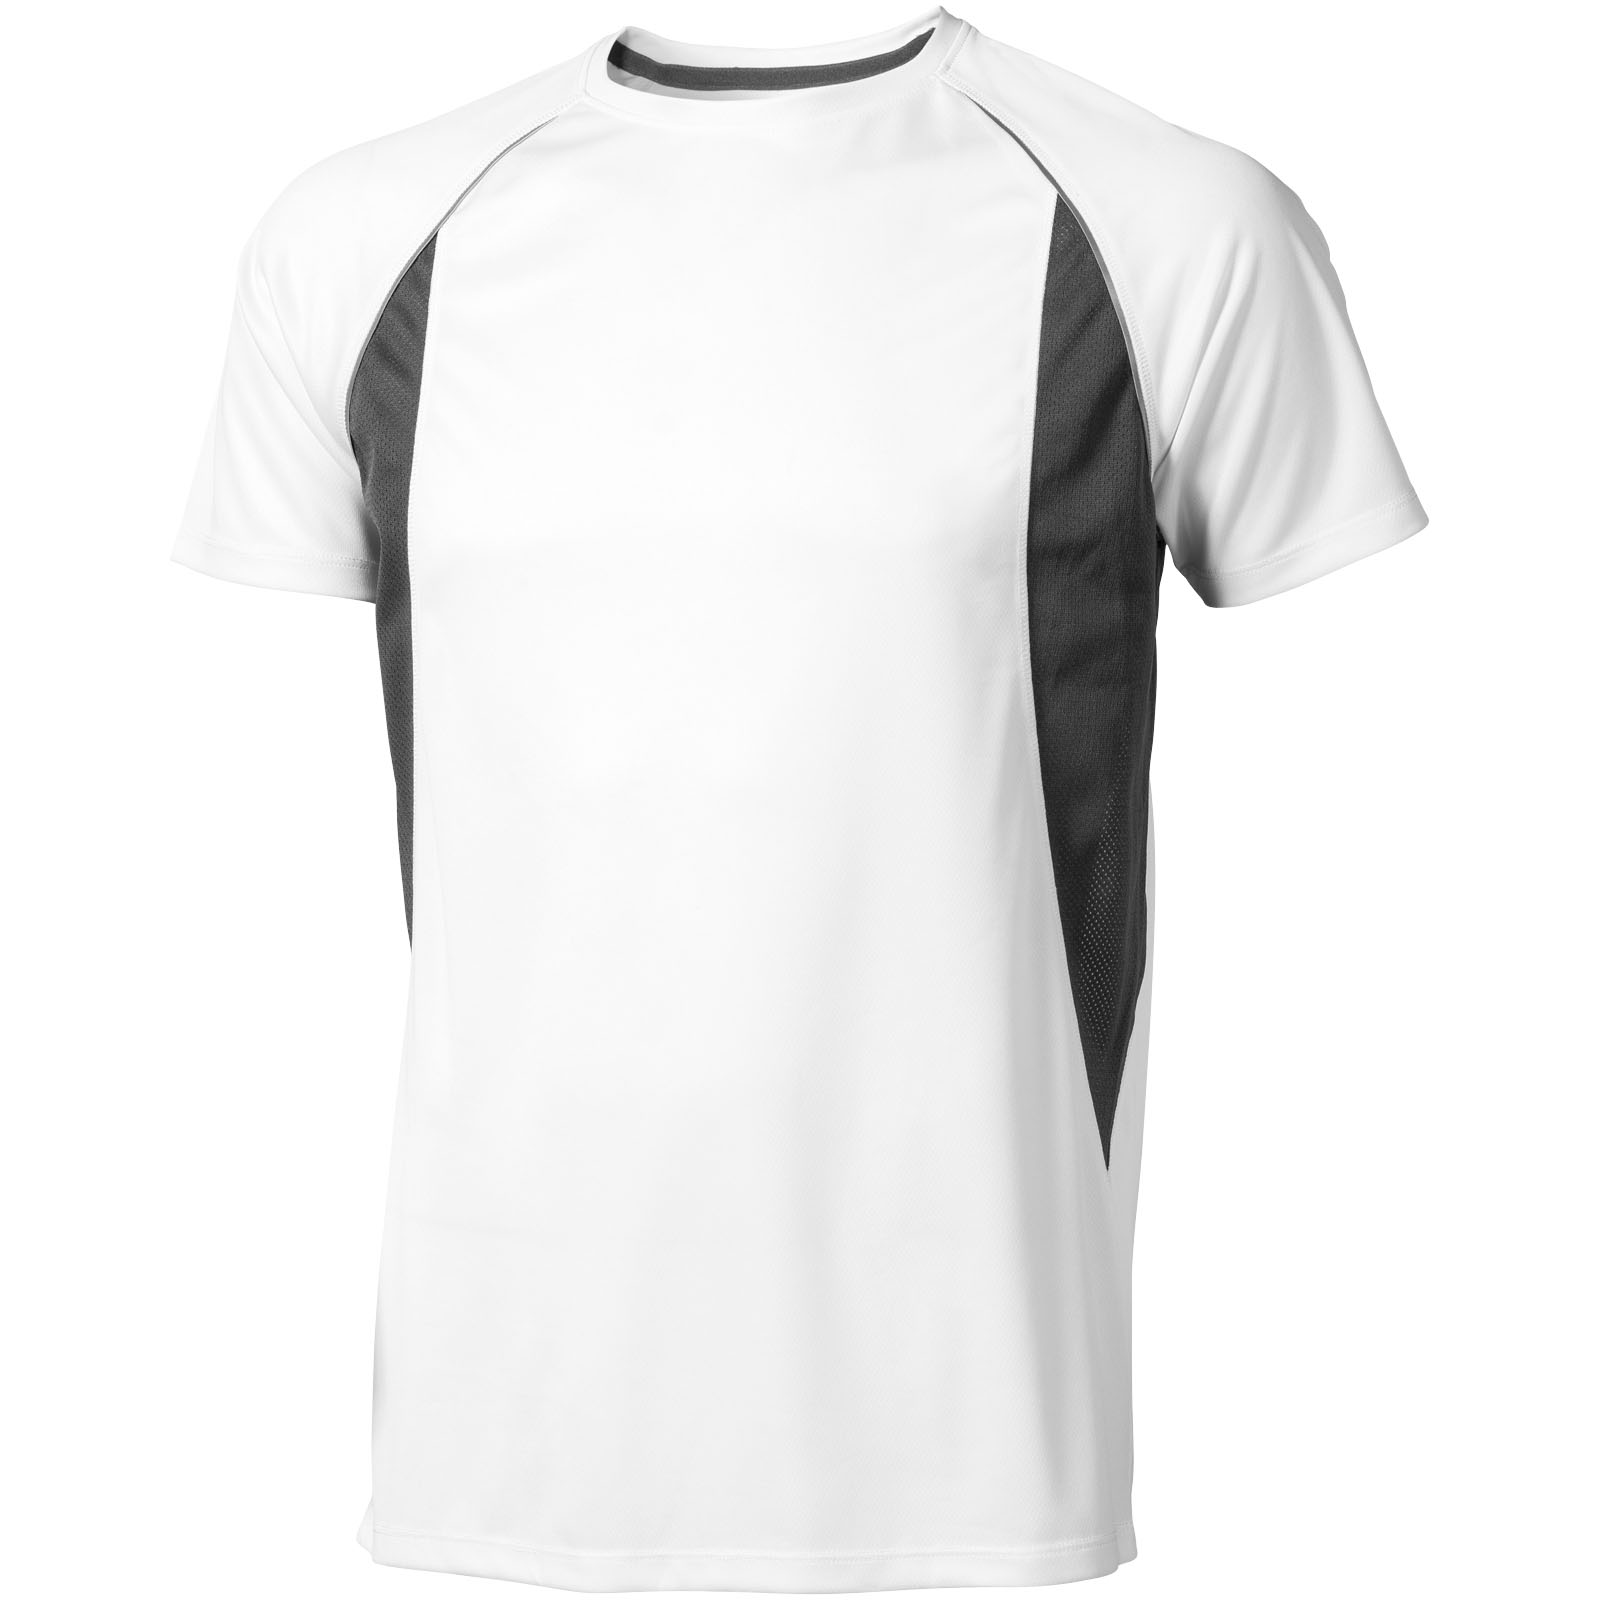 Camiseta Deportiva con Panel de Malla Reflectante - Arquillos